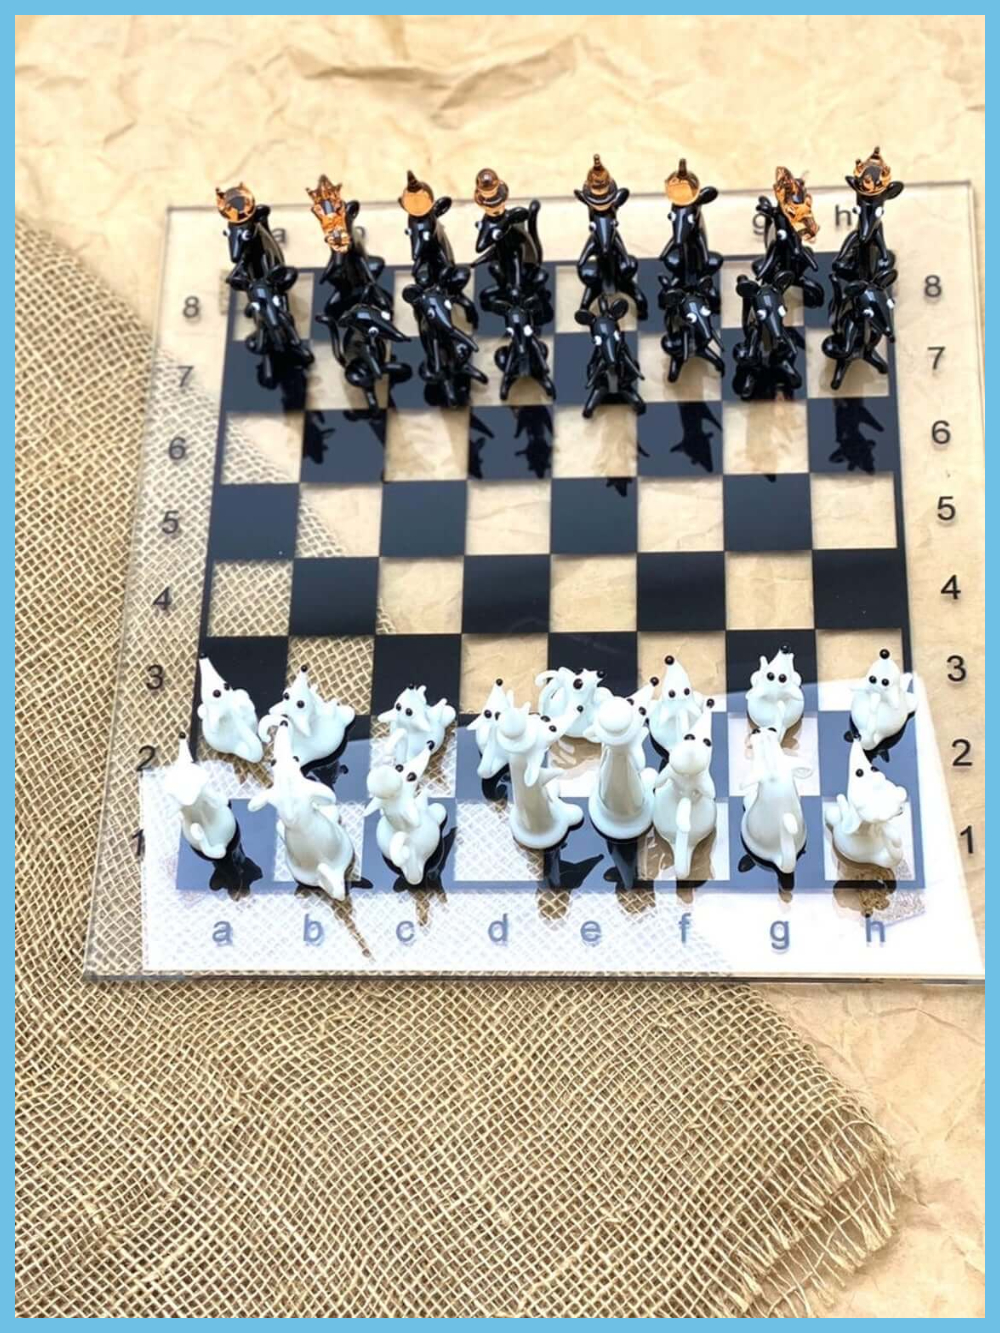 Handmade Glass Chess Set